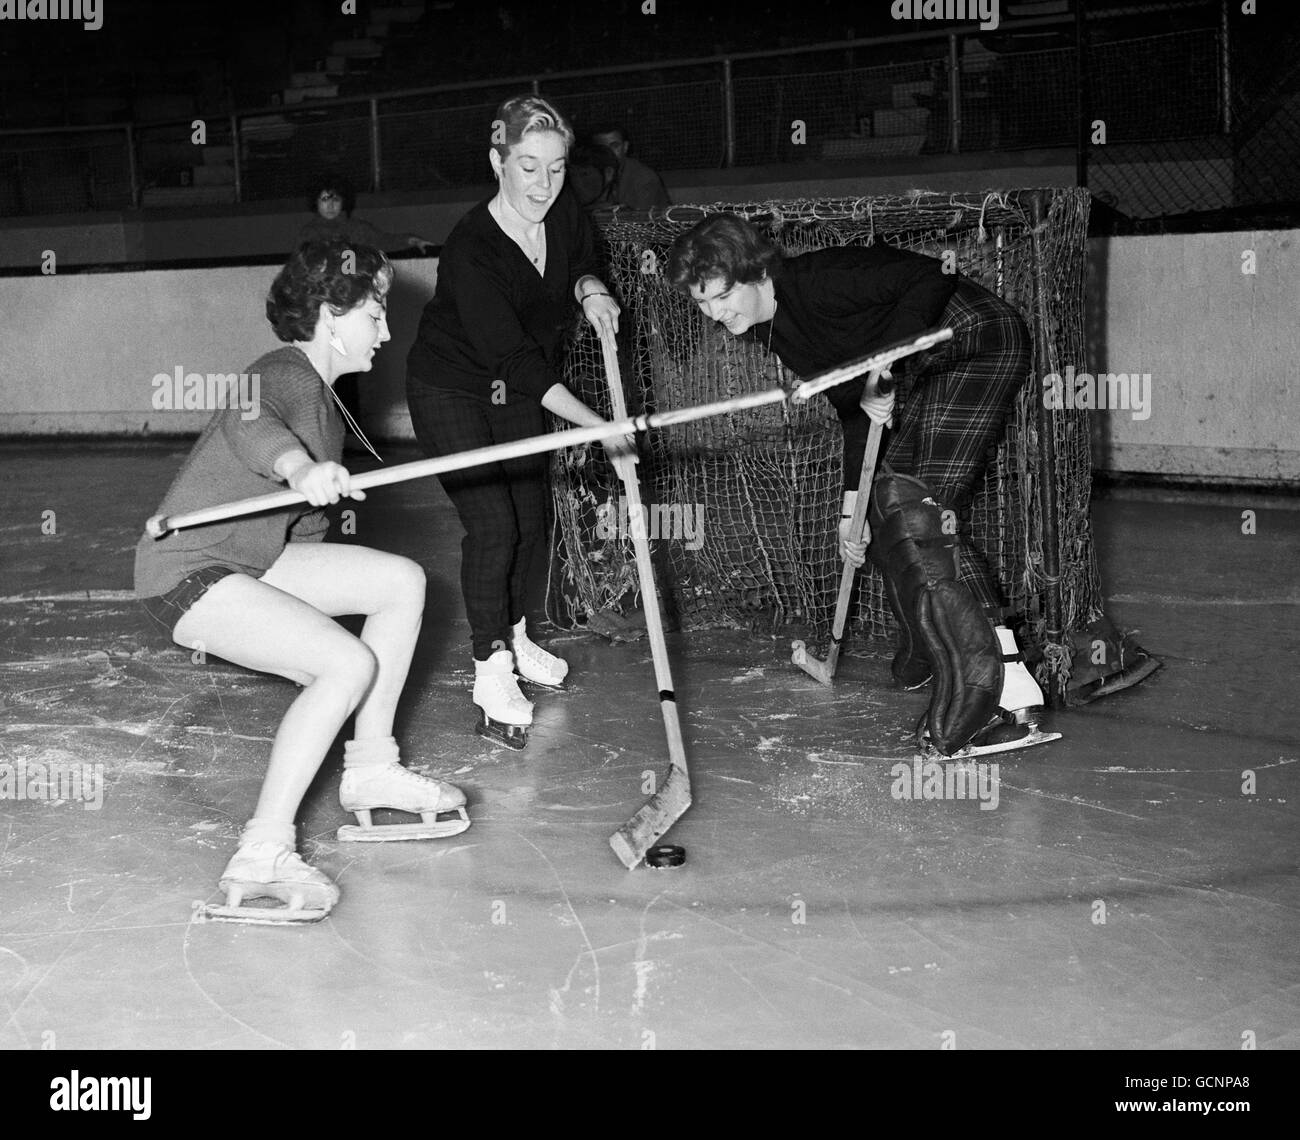 Ice Hockey - New Girls Team - London Stock Photo